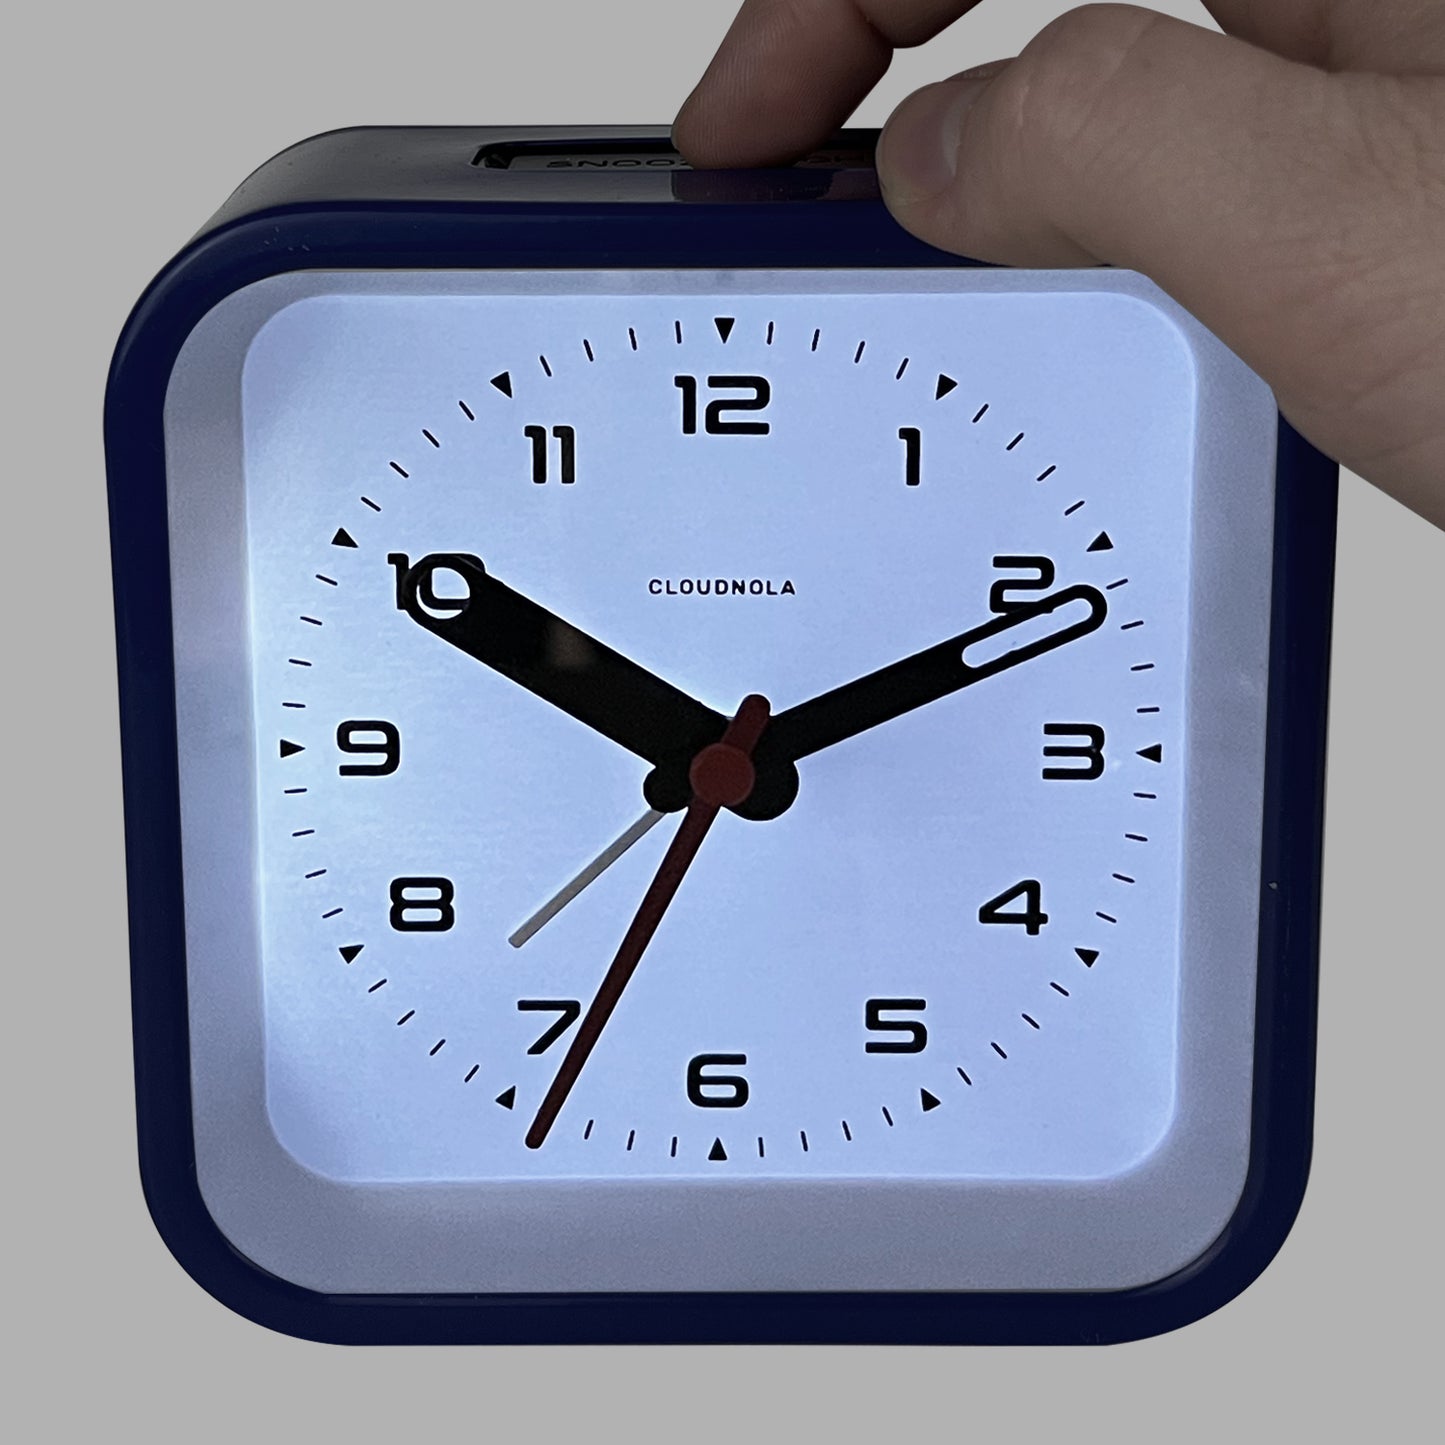 Railway Blue Alarm Clock